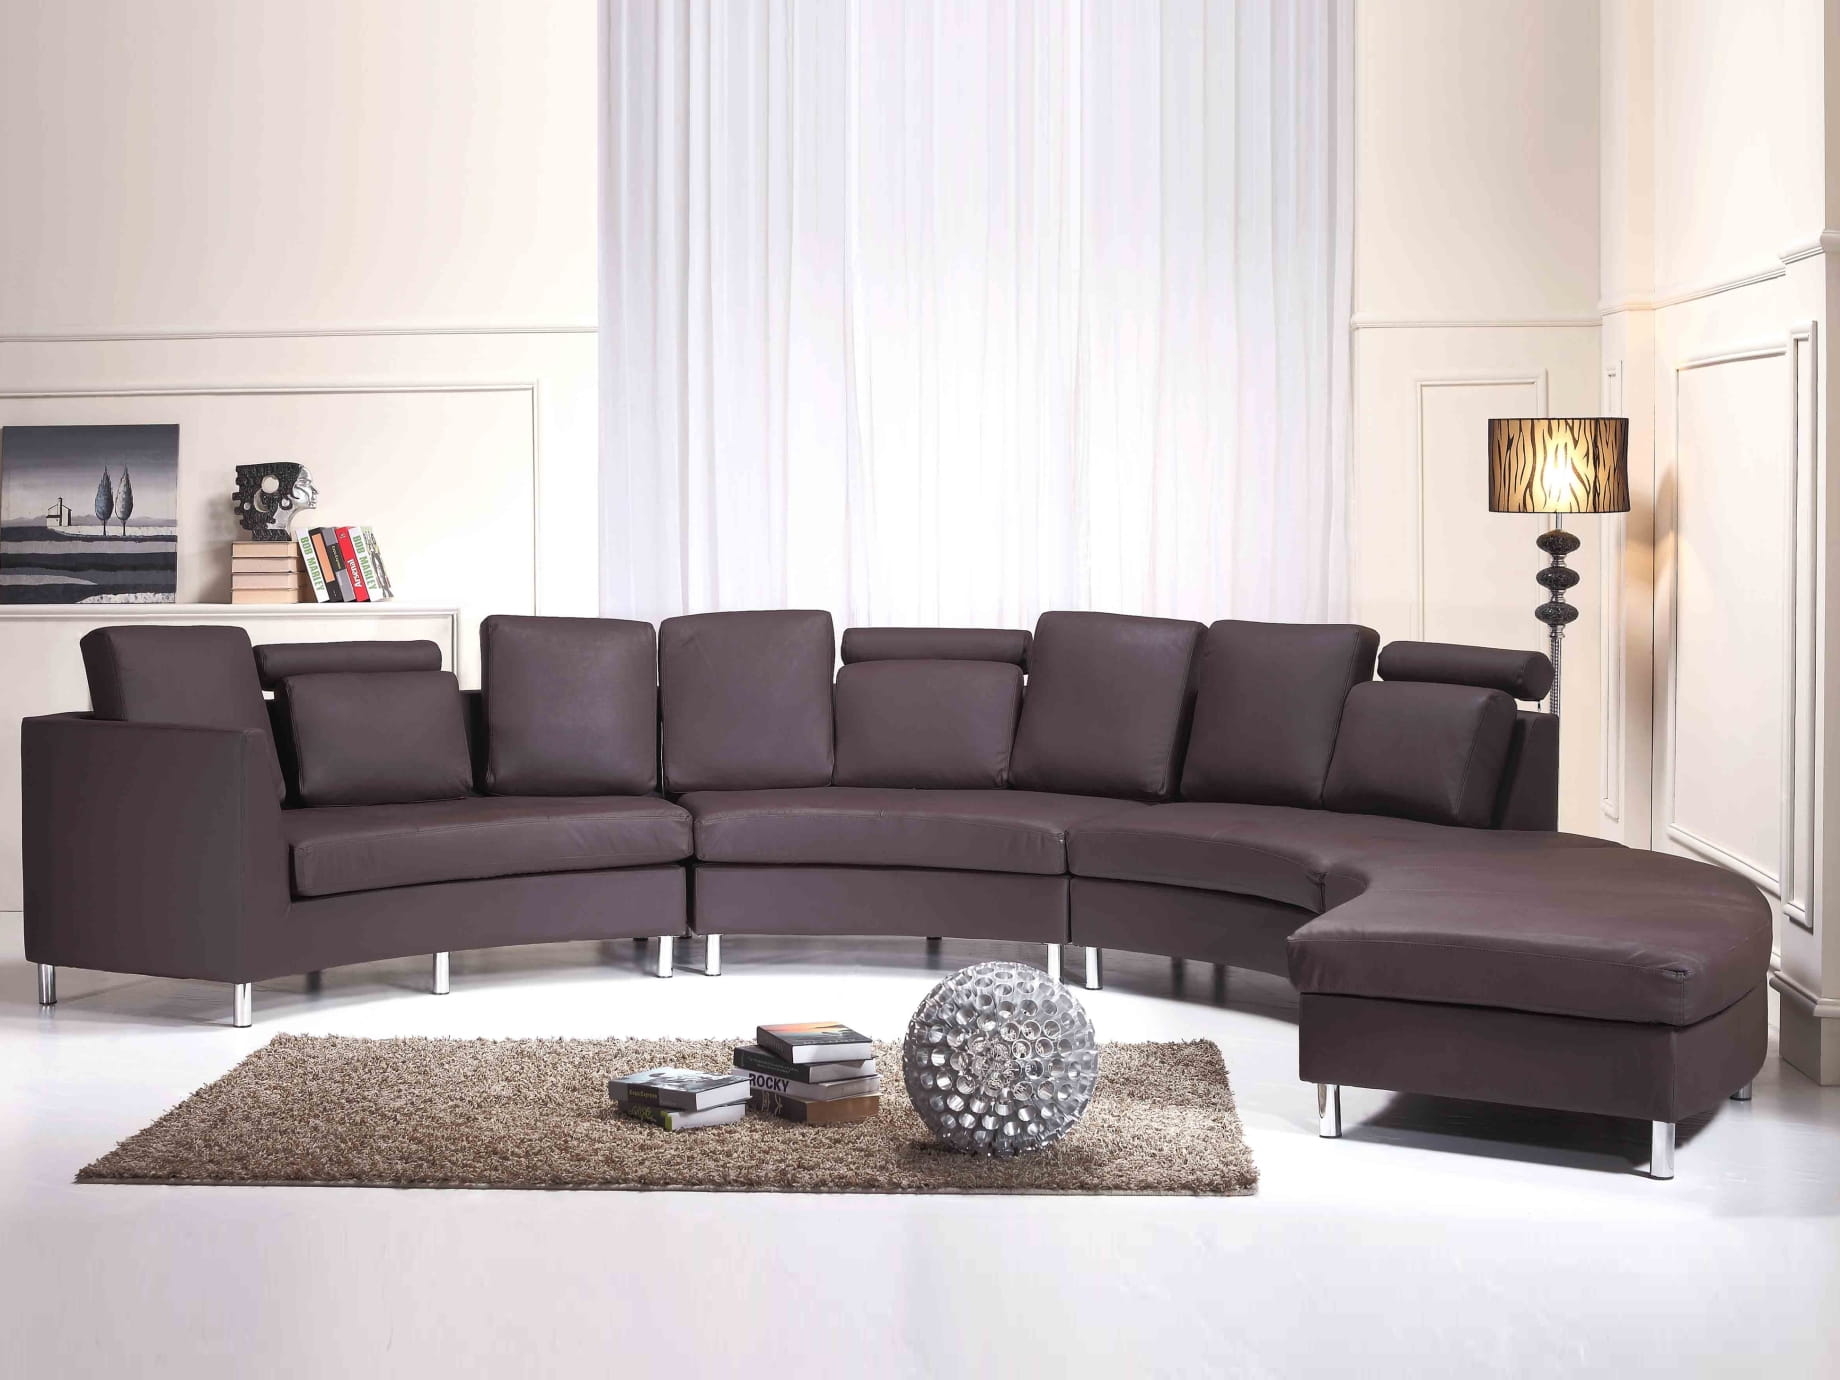 Round leather sofa 26